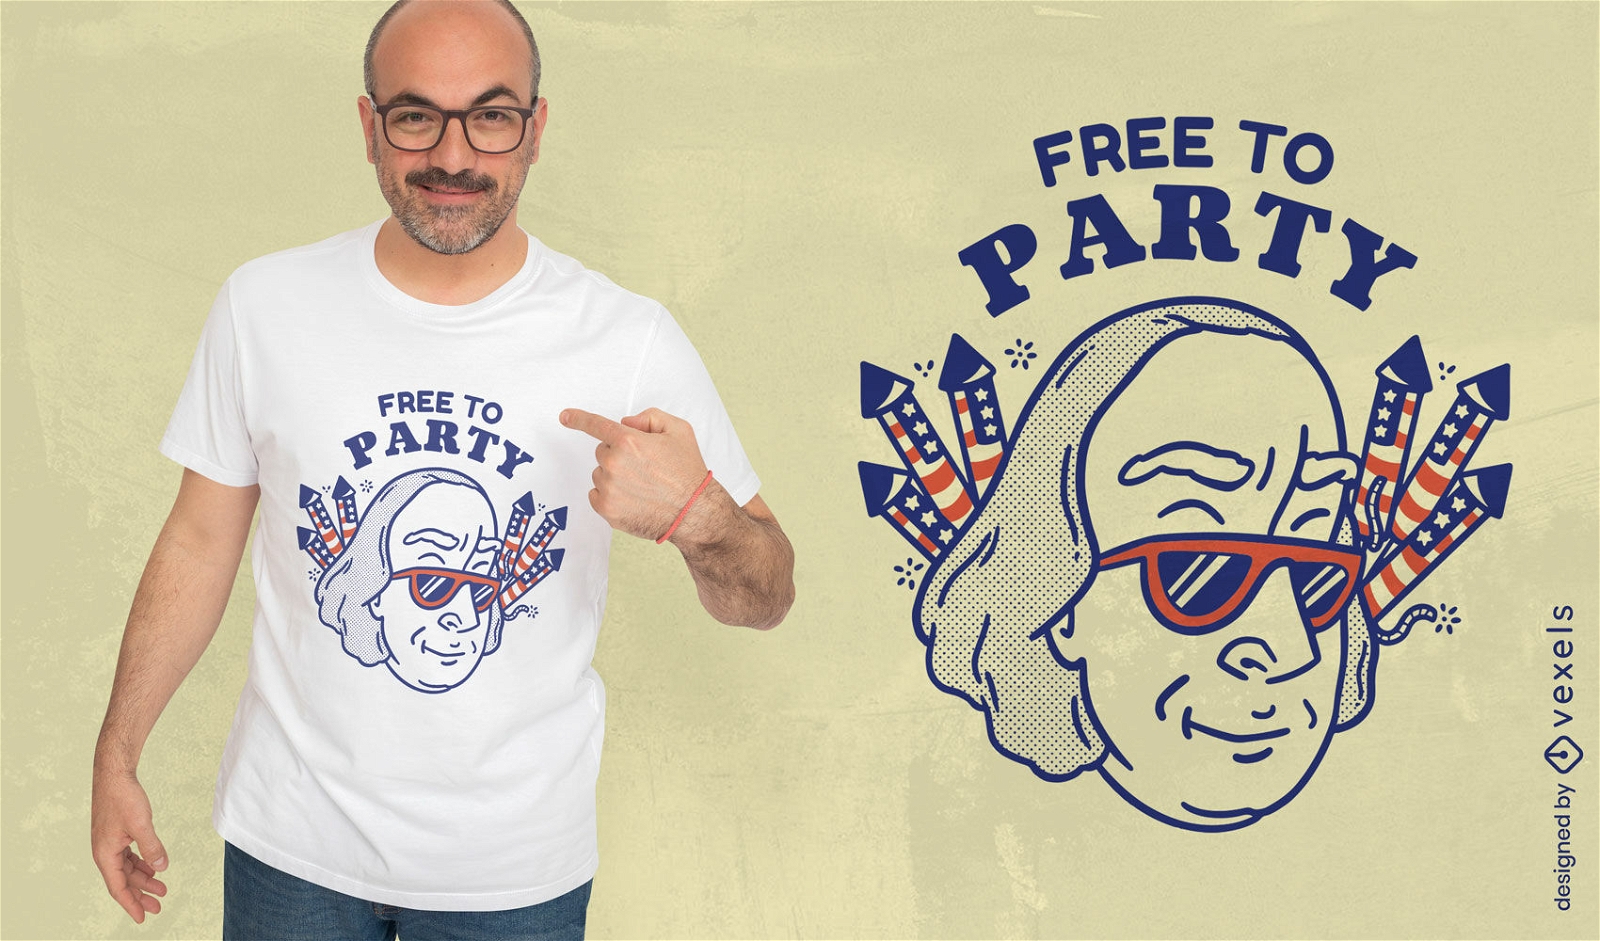 Benjamin Franklin Partystimmung T-Shirt Design